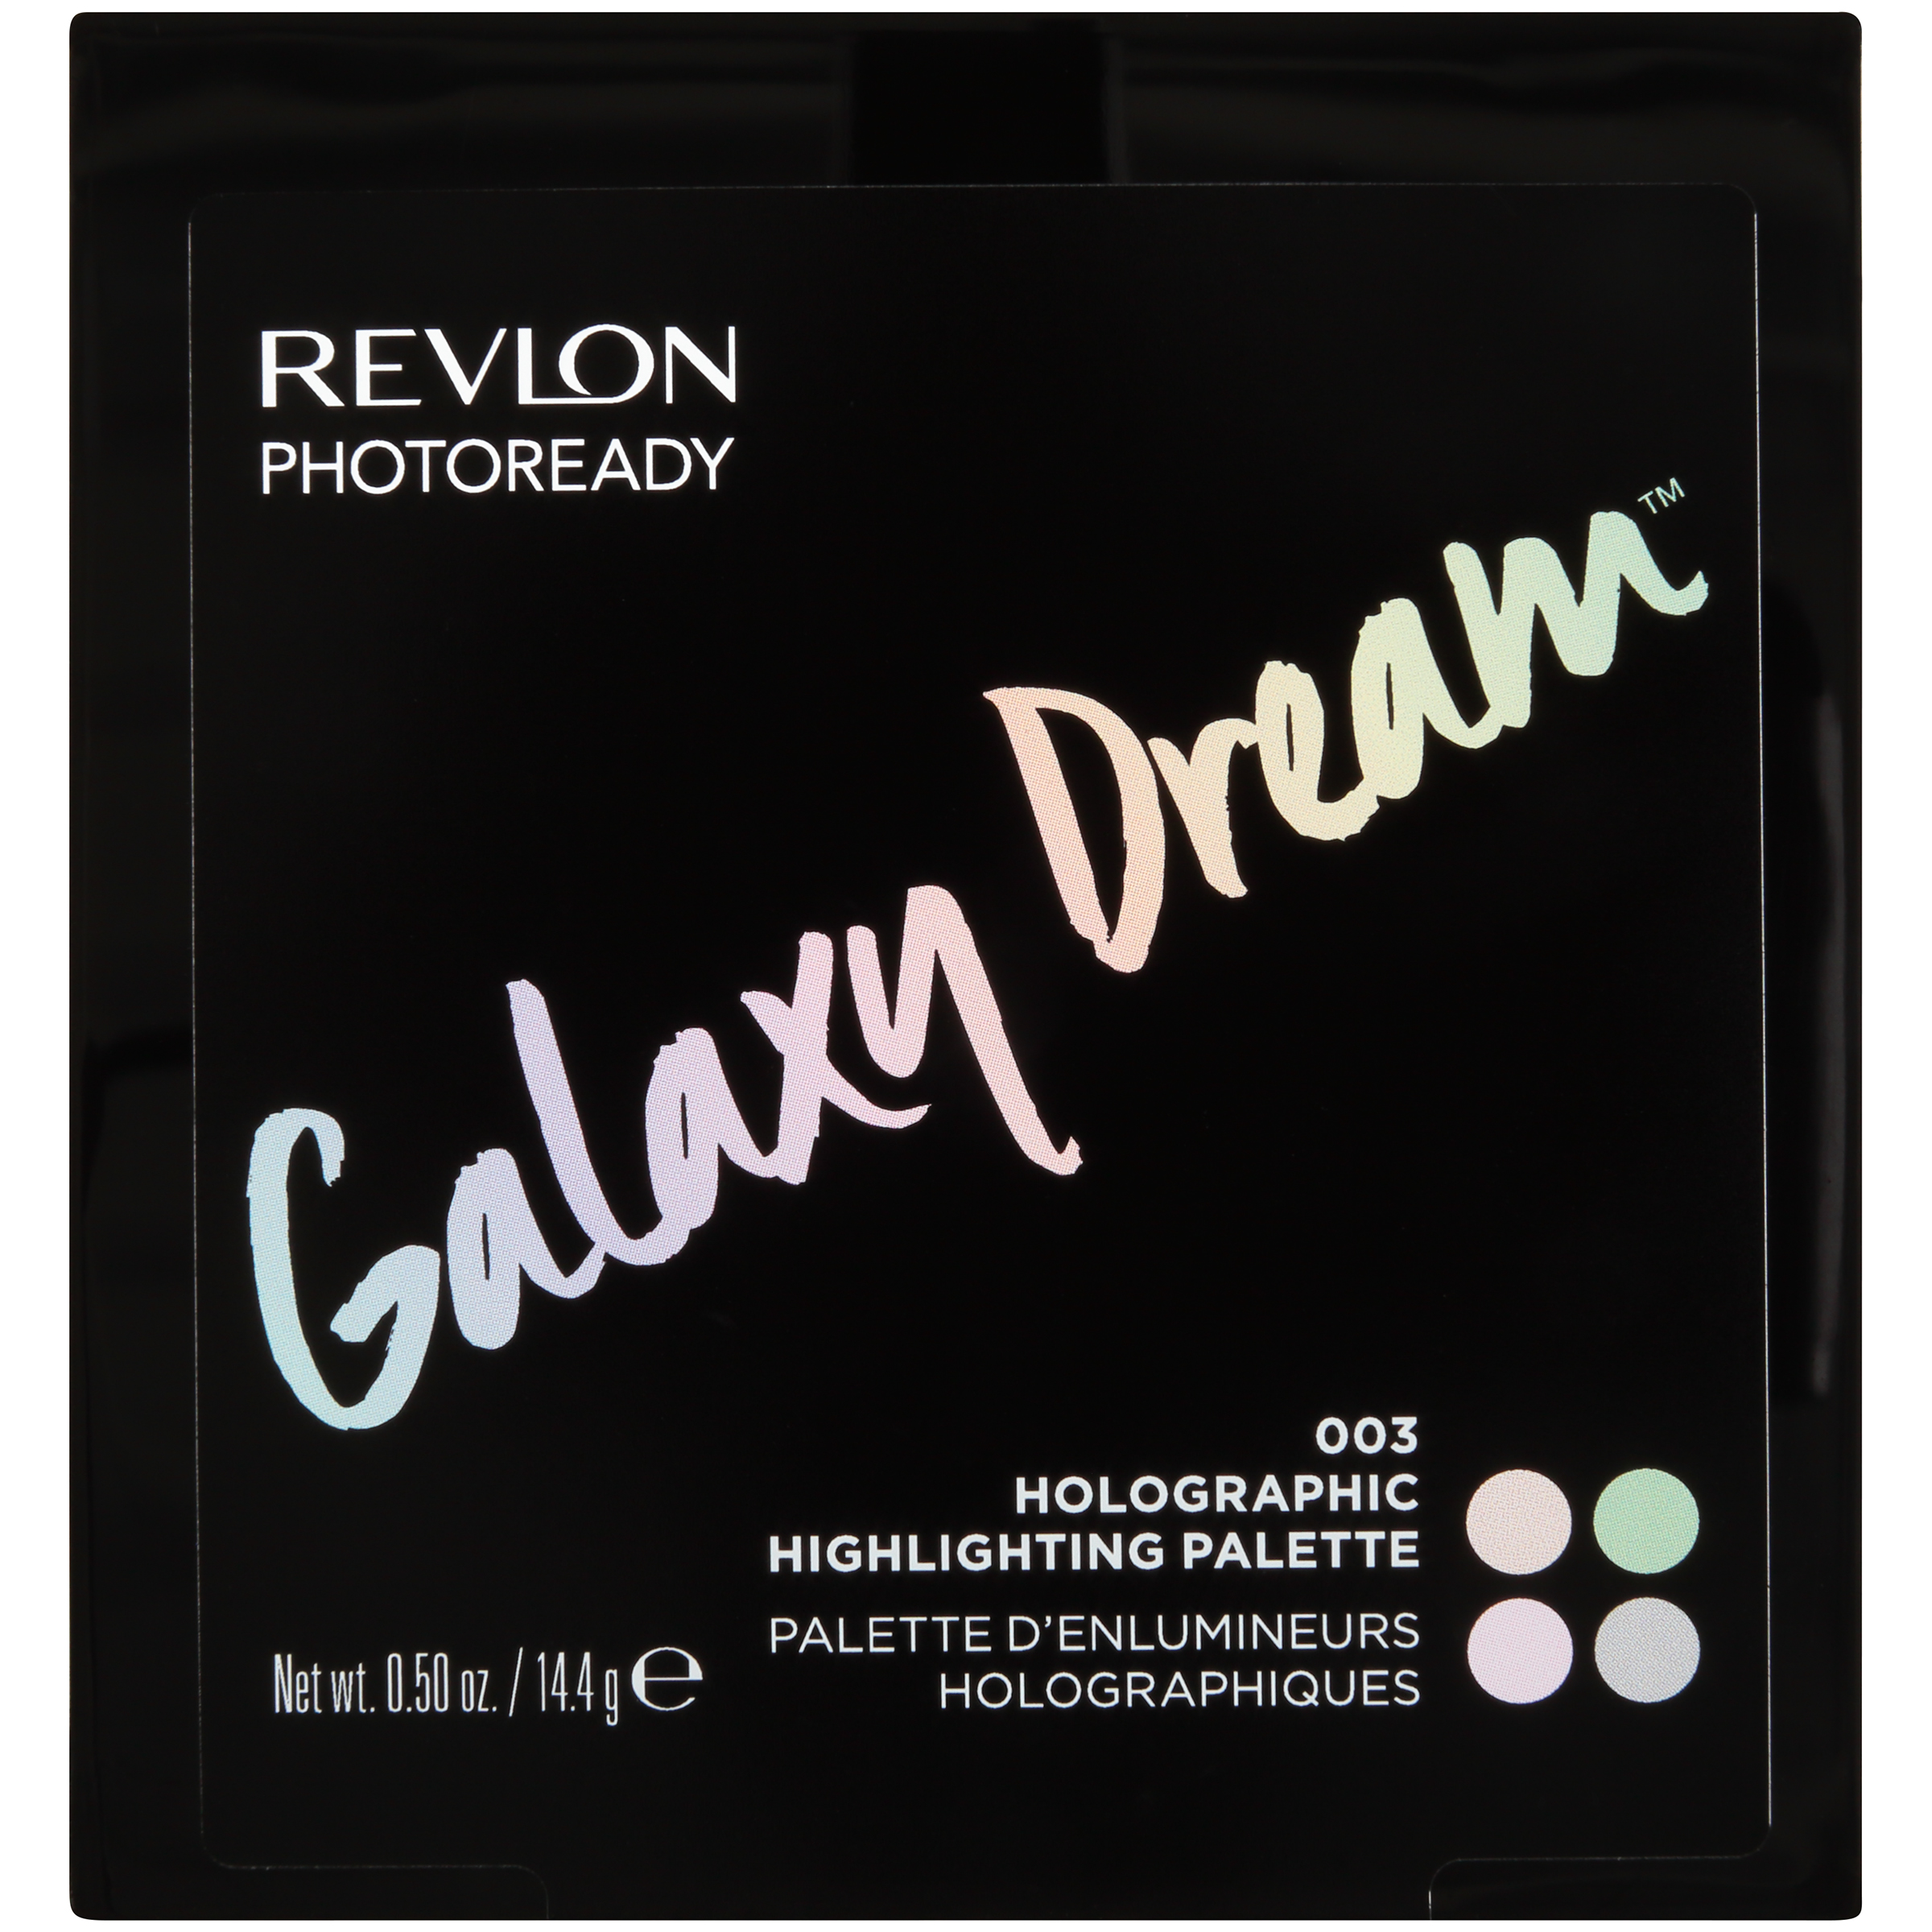 Revlon PhotoReady Highlighting Palette, Galaxy Dream - image 2 of 4